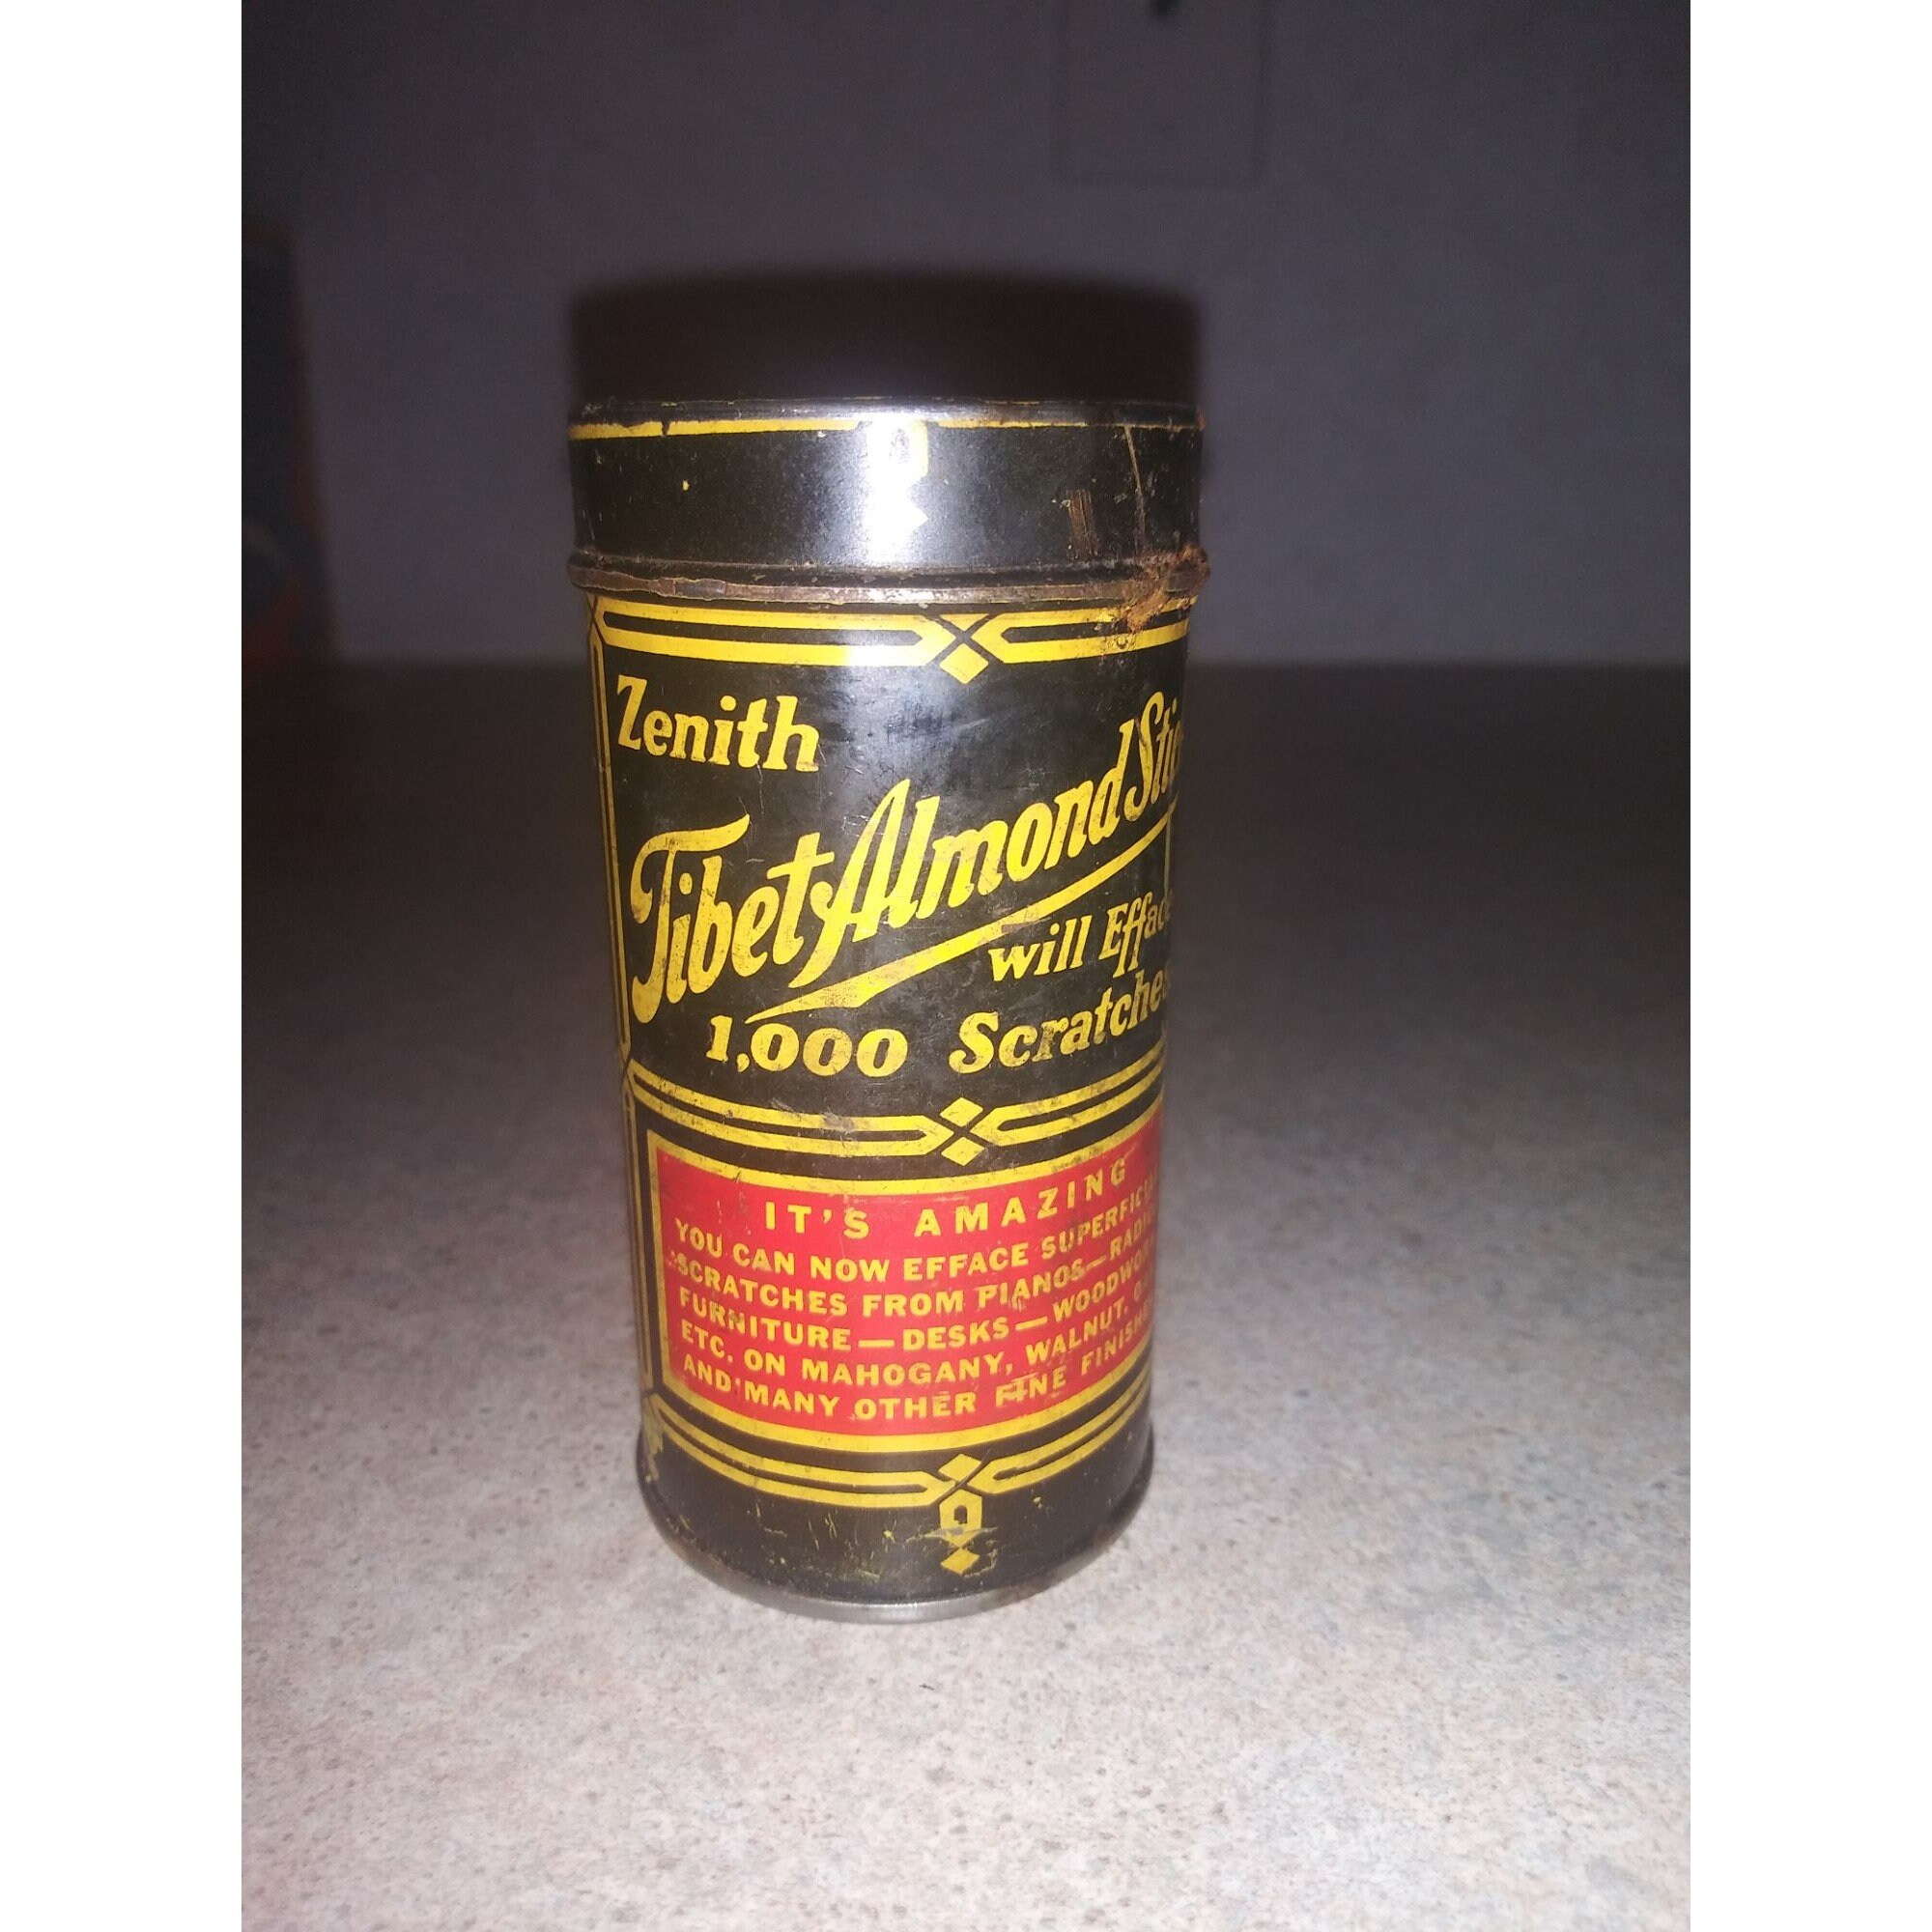 Vintage Zenith Tibet Almond Stick Scratch Remover Advertising Tin